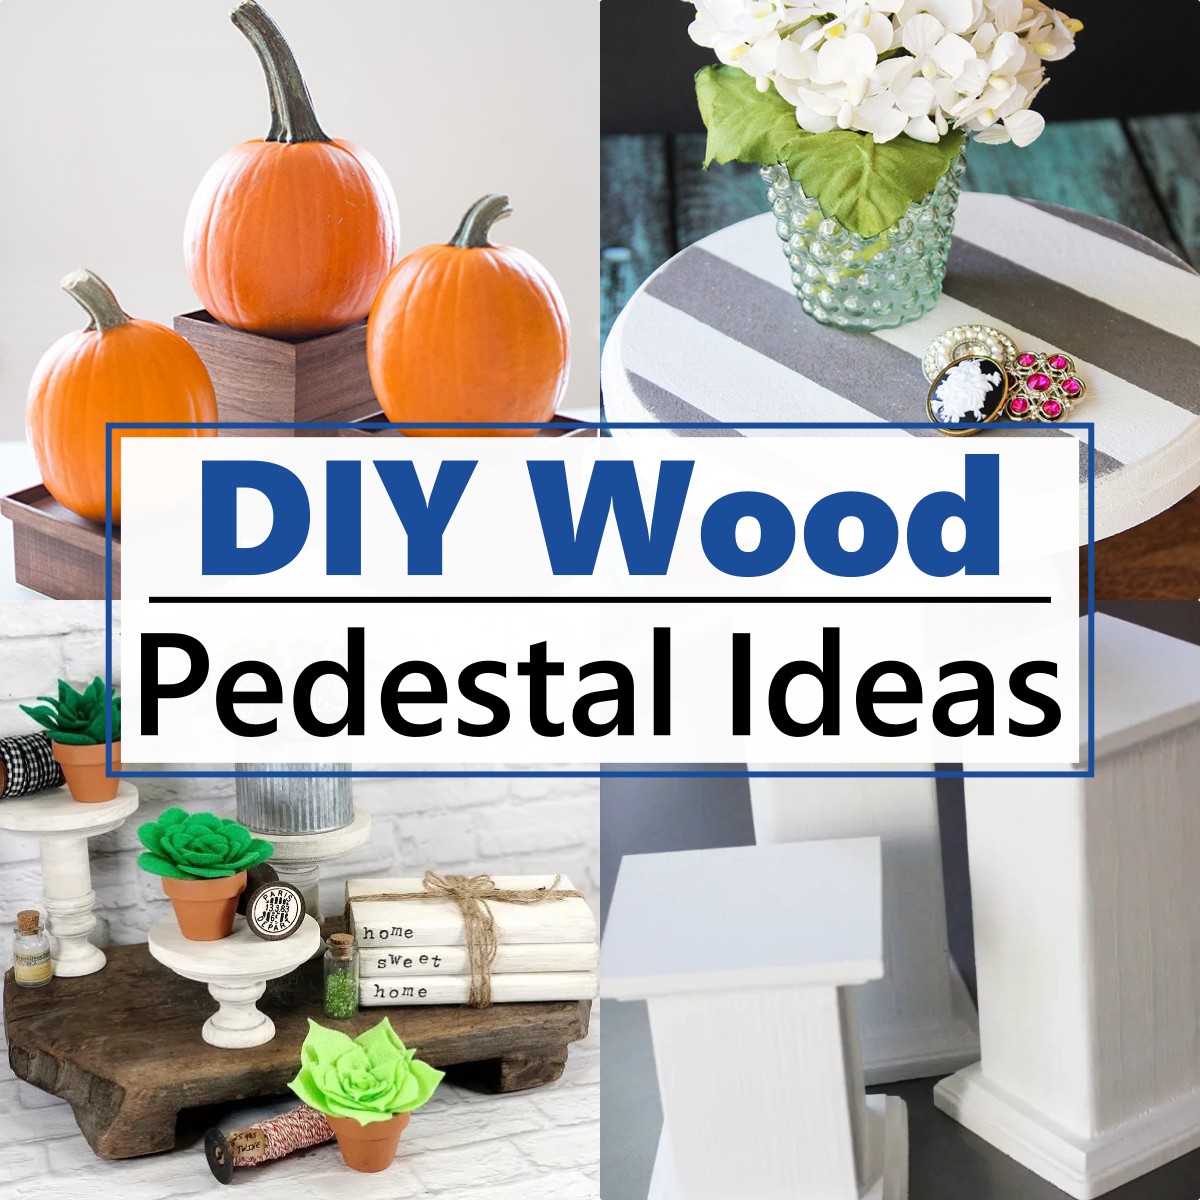 DIY Wood Pedestal Ideas